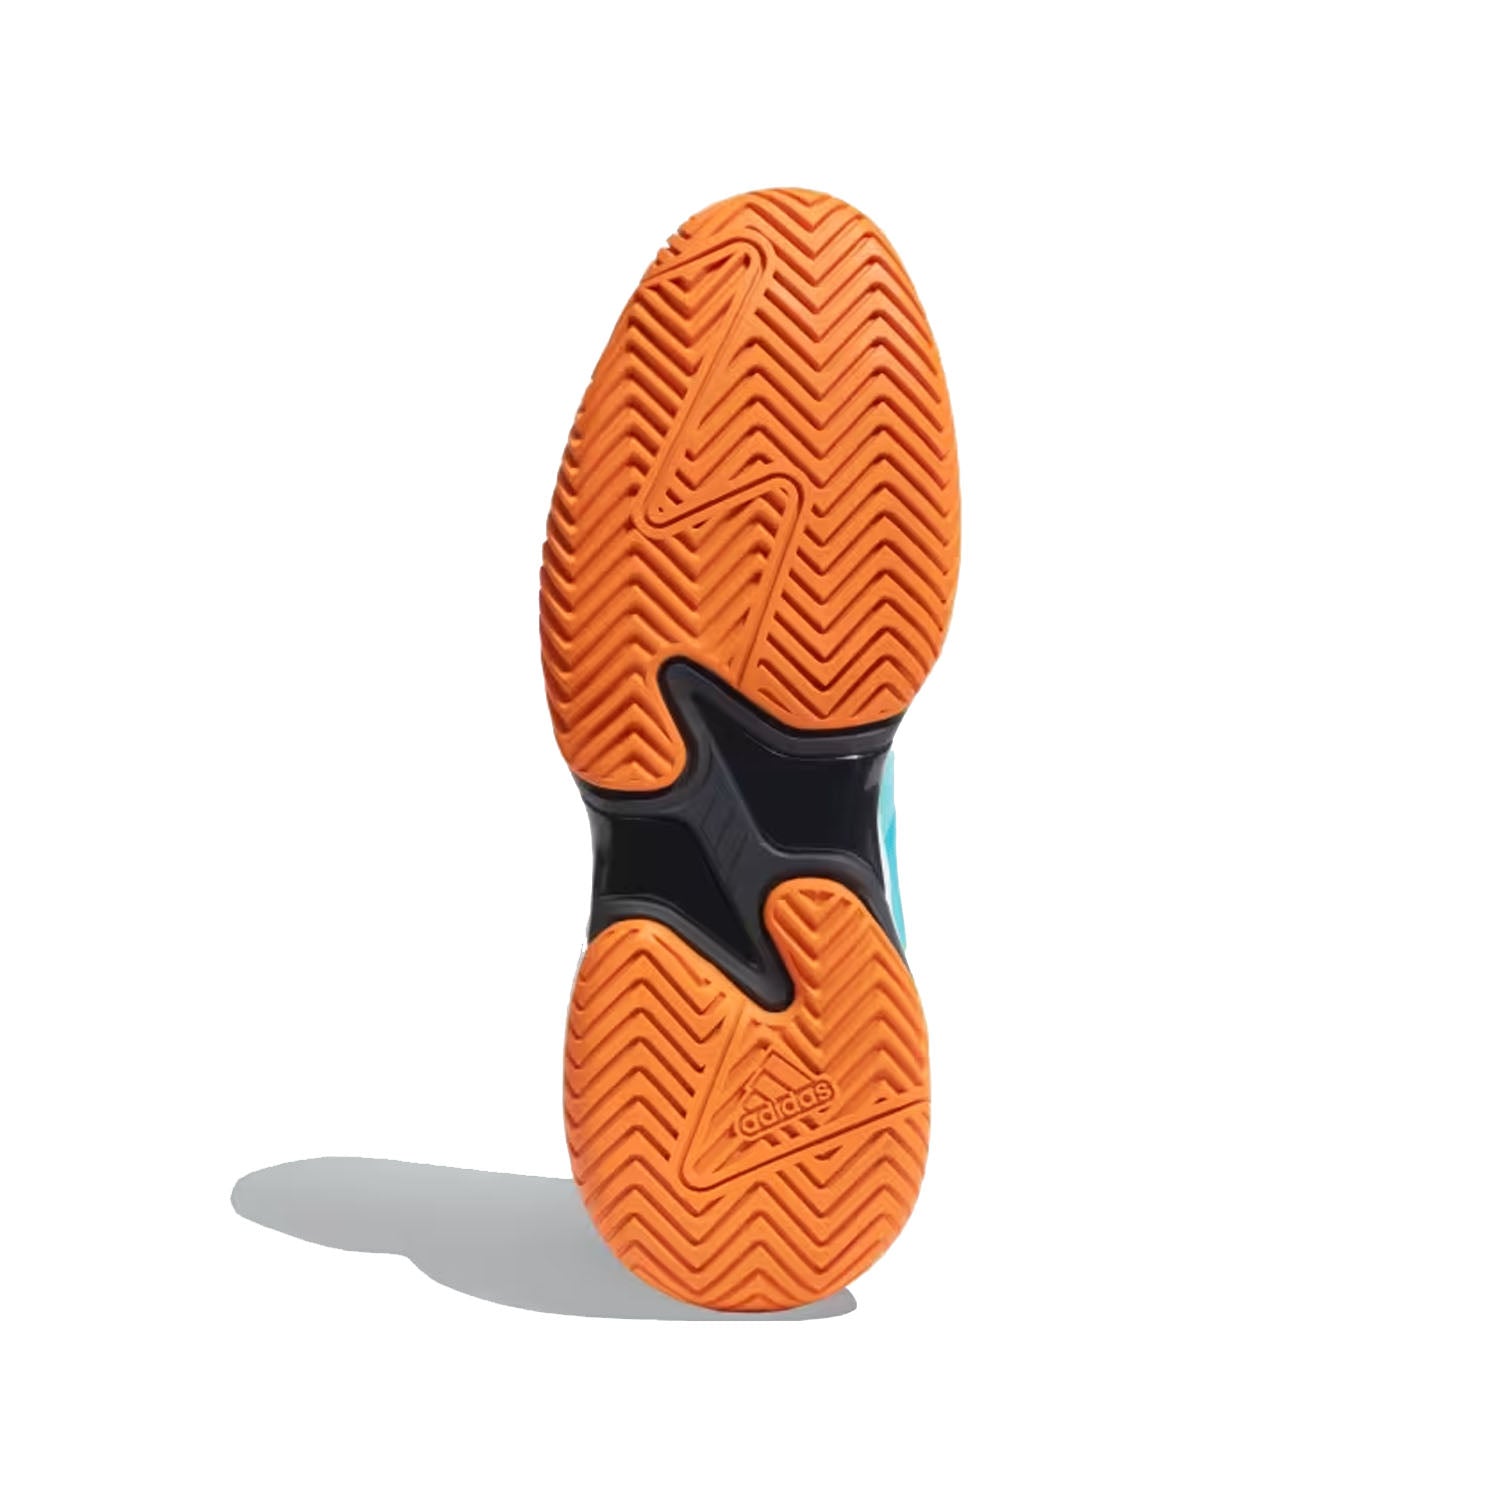 Adidas All-Court Prime Tennis Shoe, Lucid Cyan/Semi Impact Orange - Best Price online Prokicksports.com